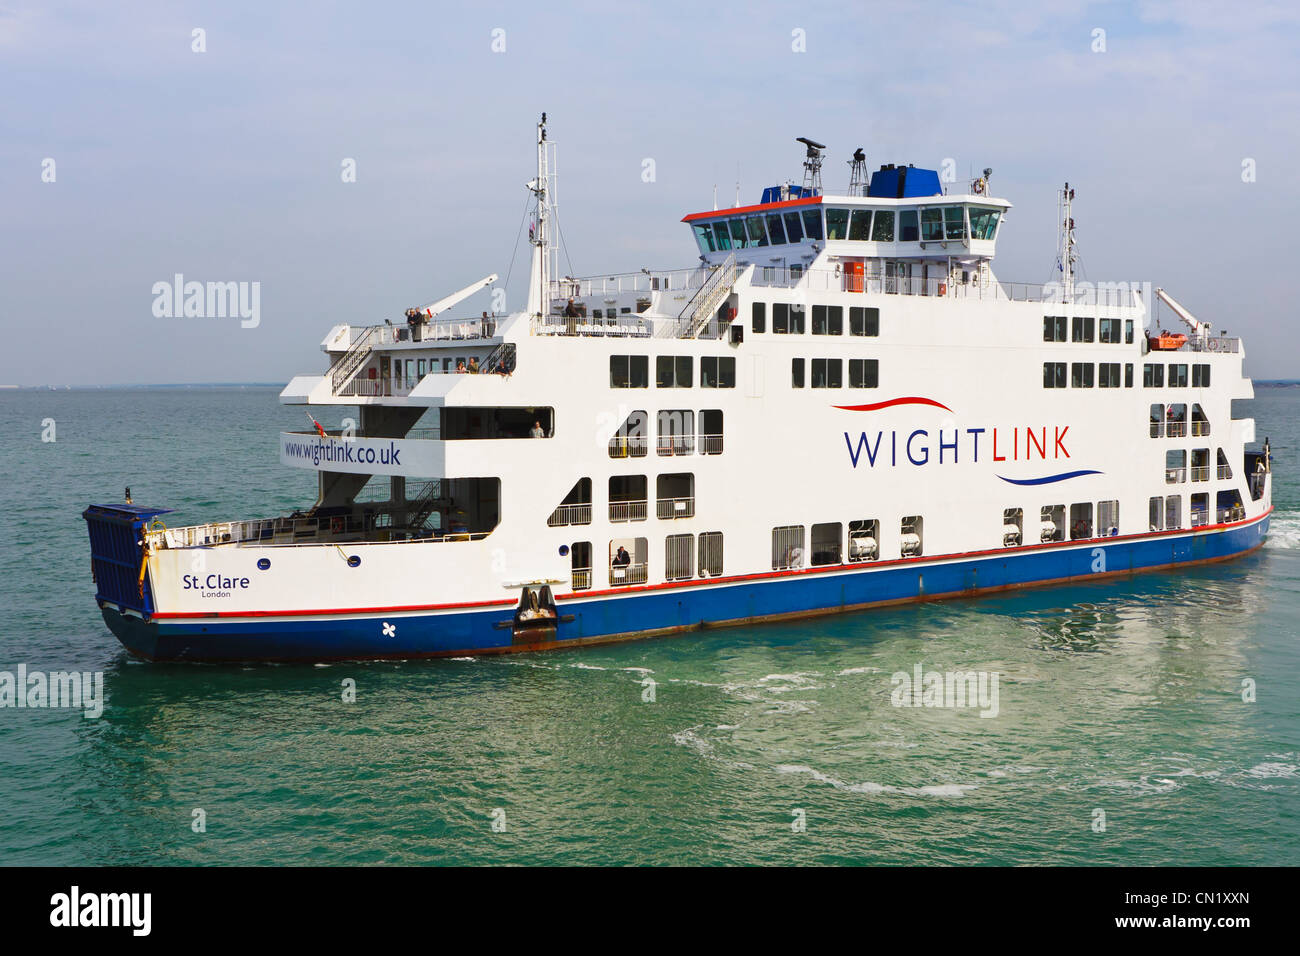 WightLink Isle of Wight ferry, UK Stock Photo